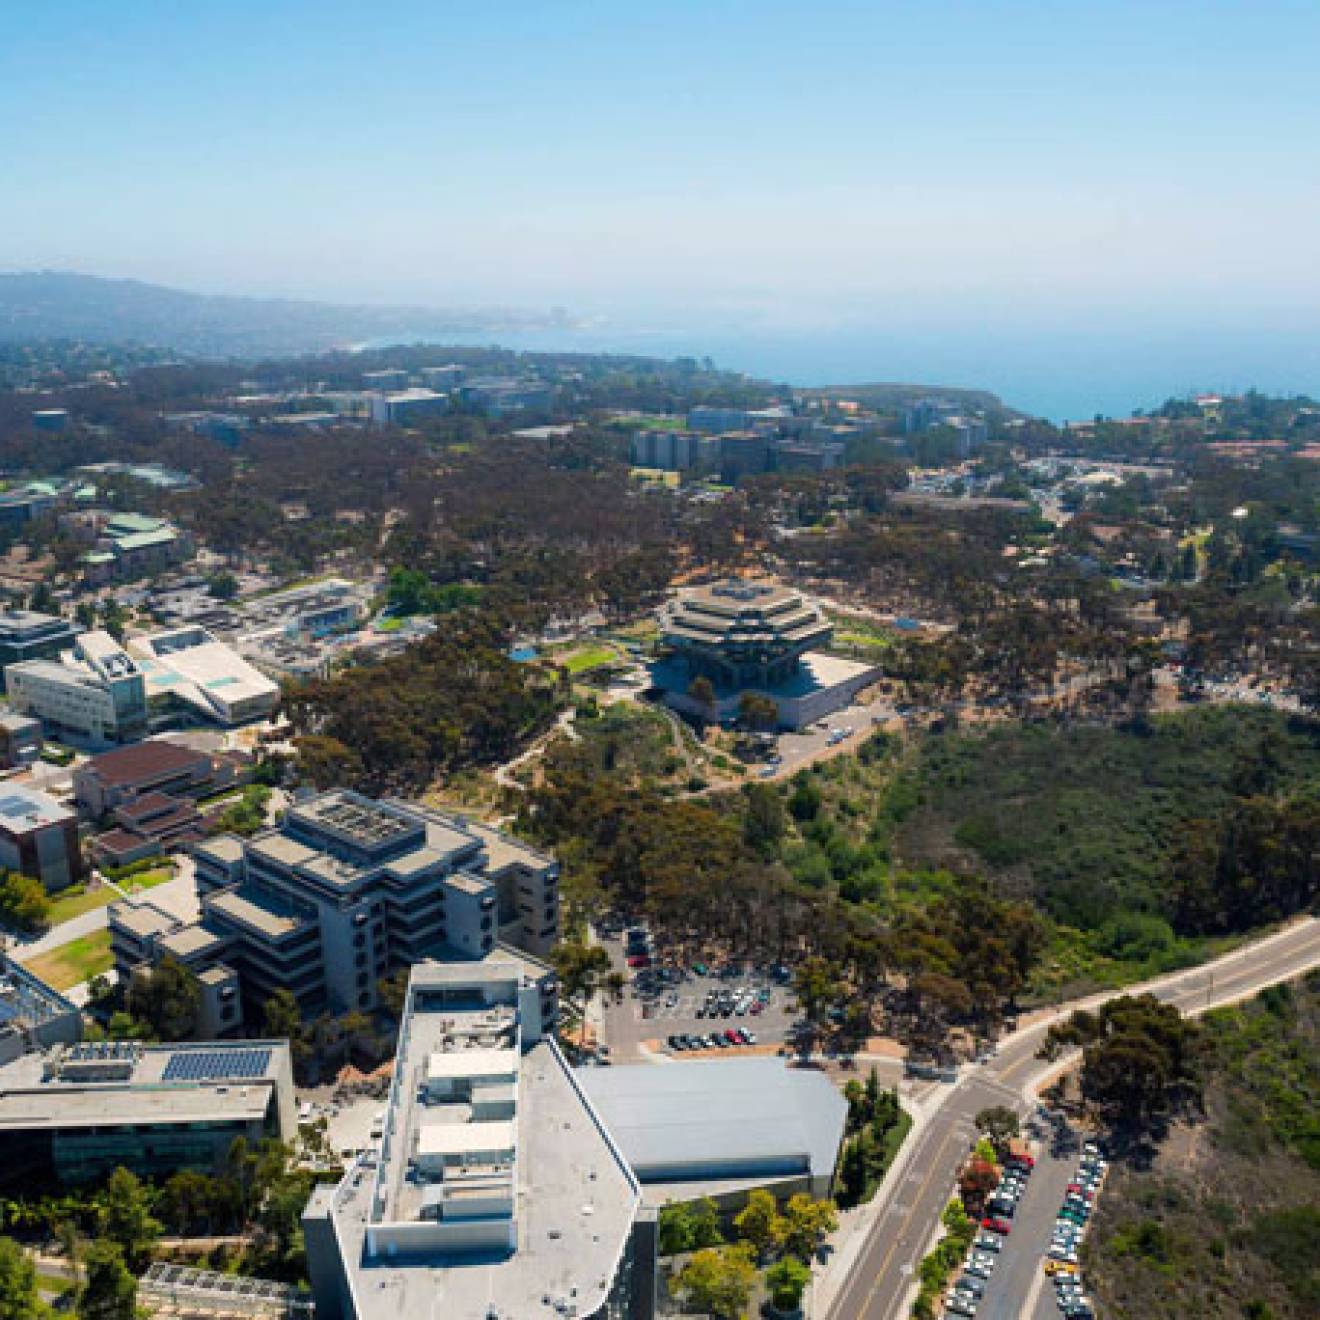 Overhead shot of UC San Diego campus